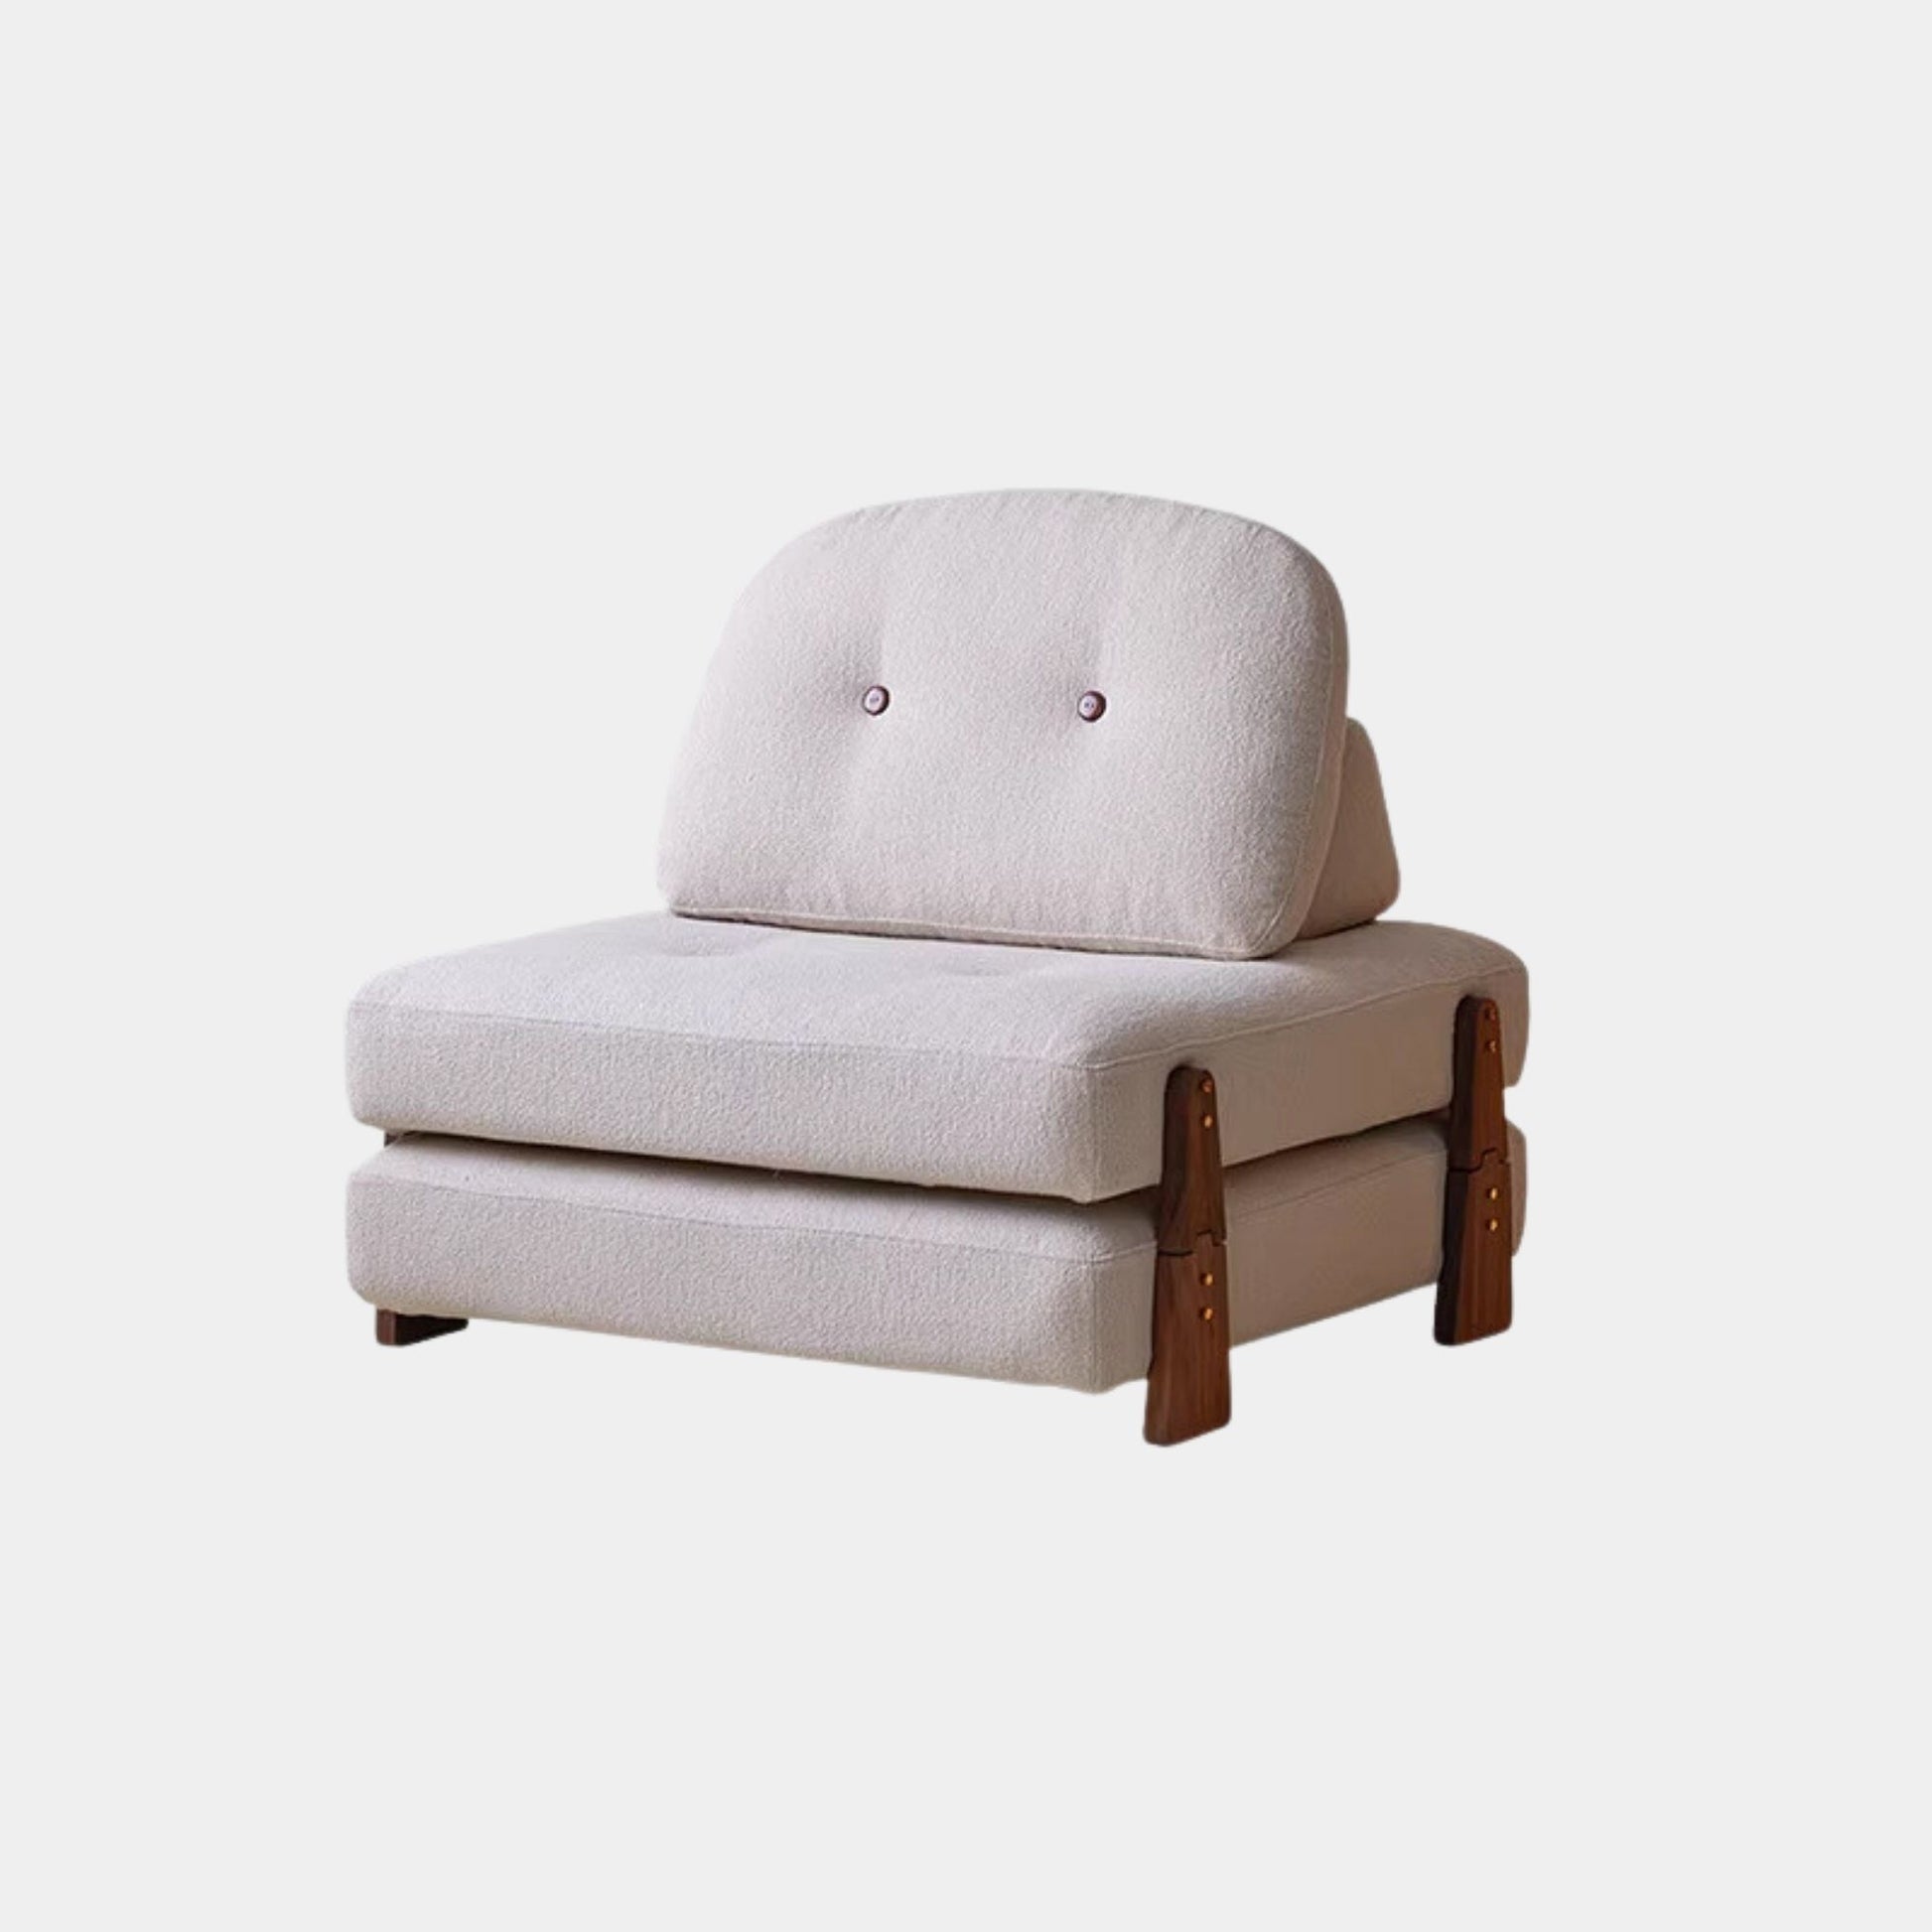 Cakelet fabric sofa bed white